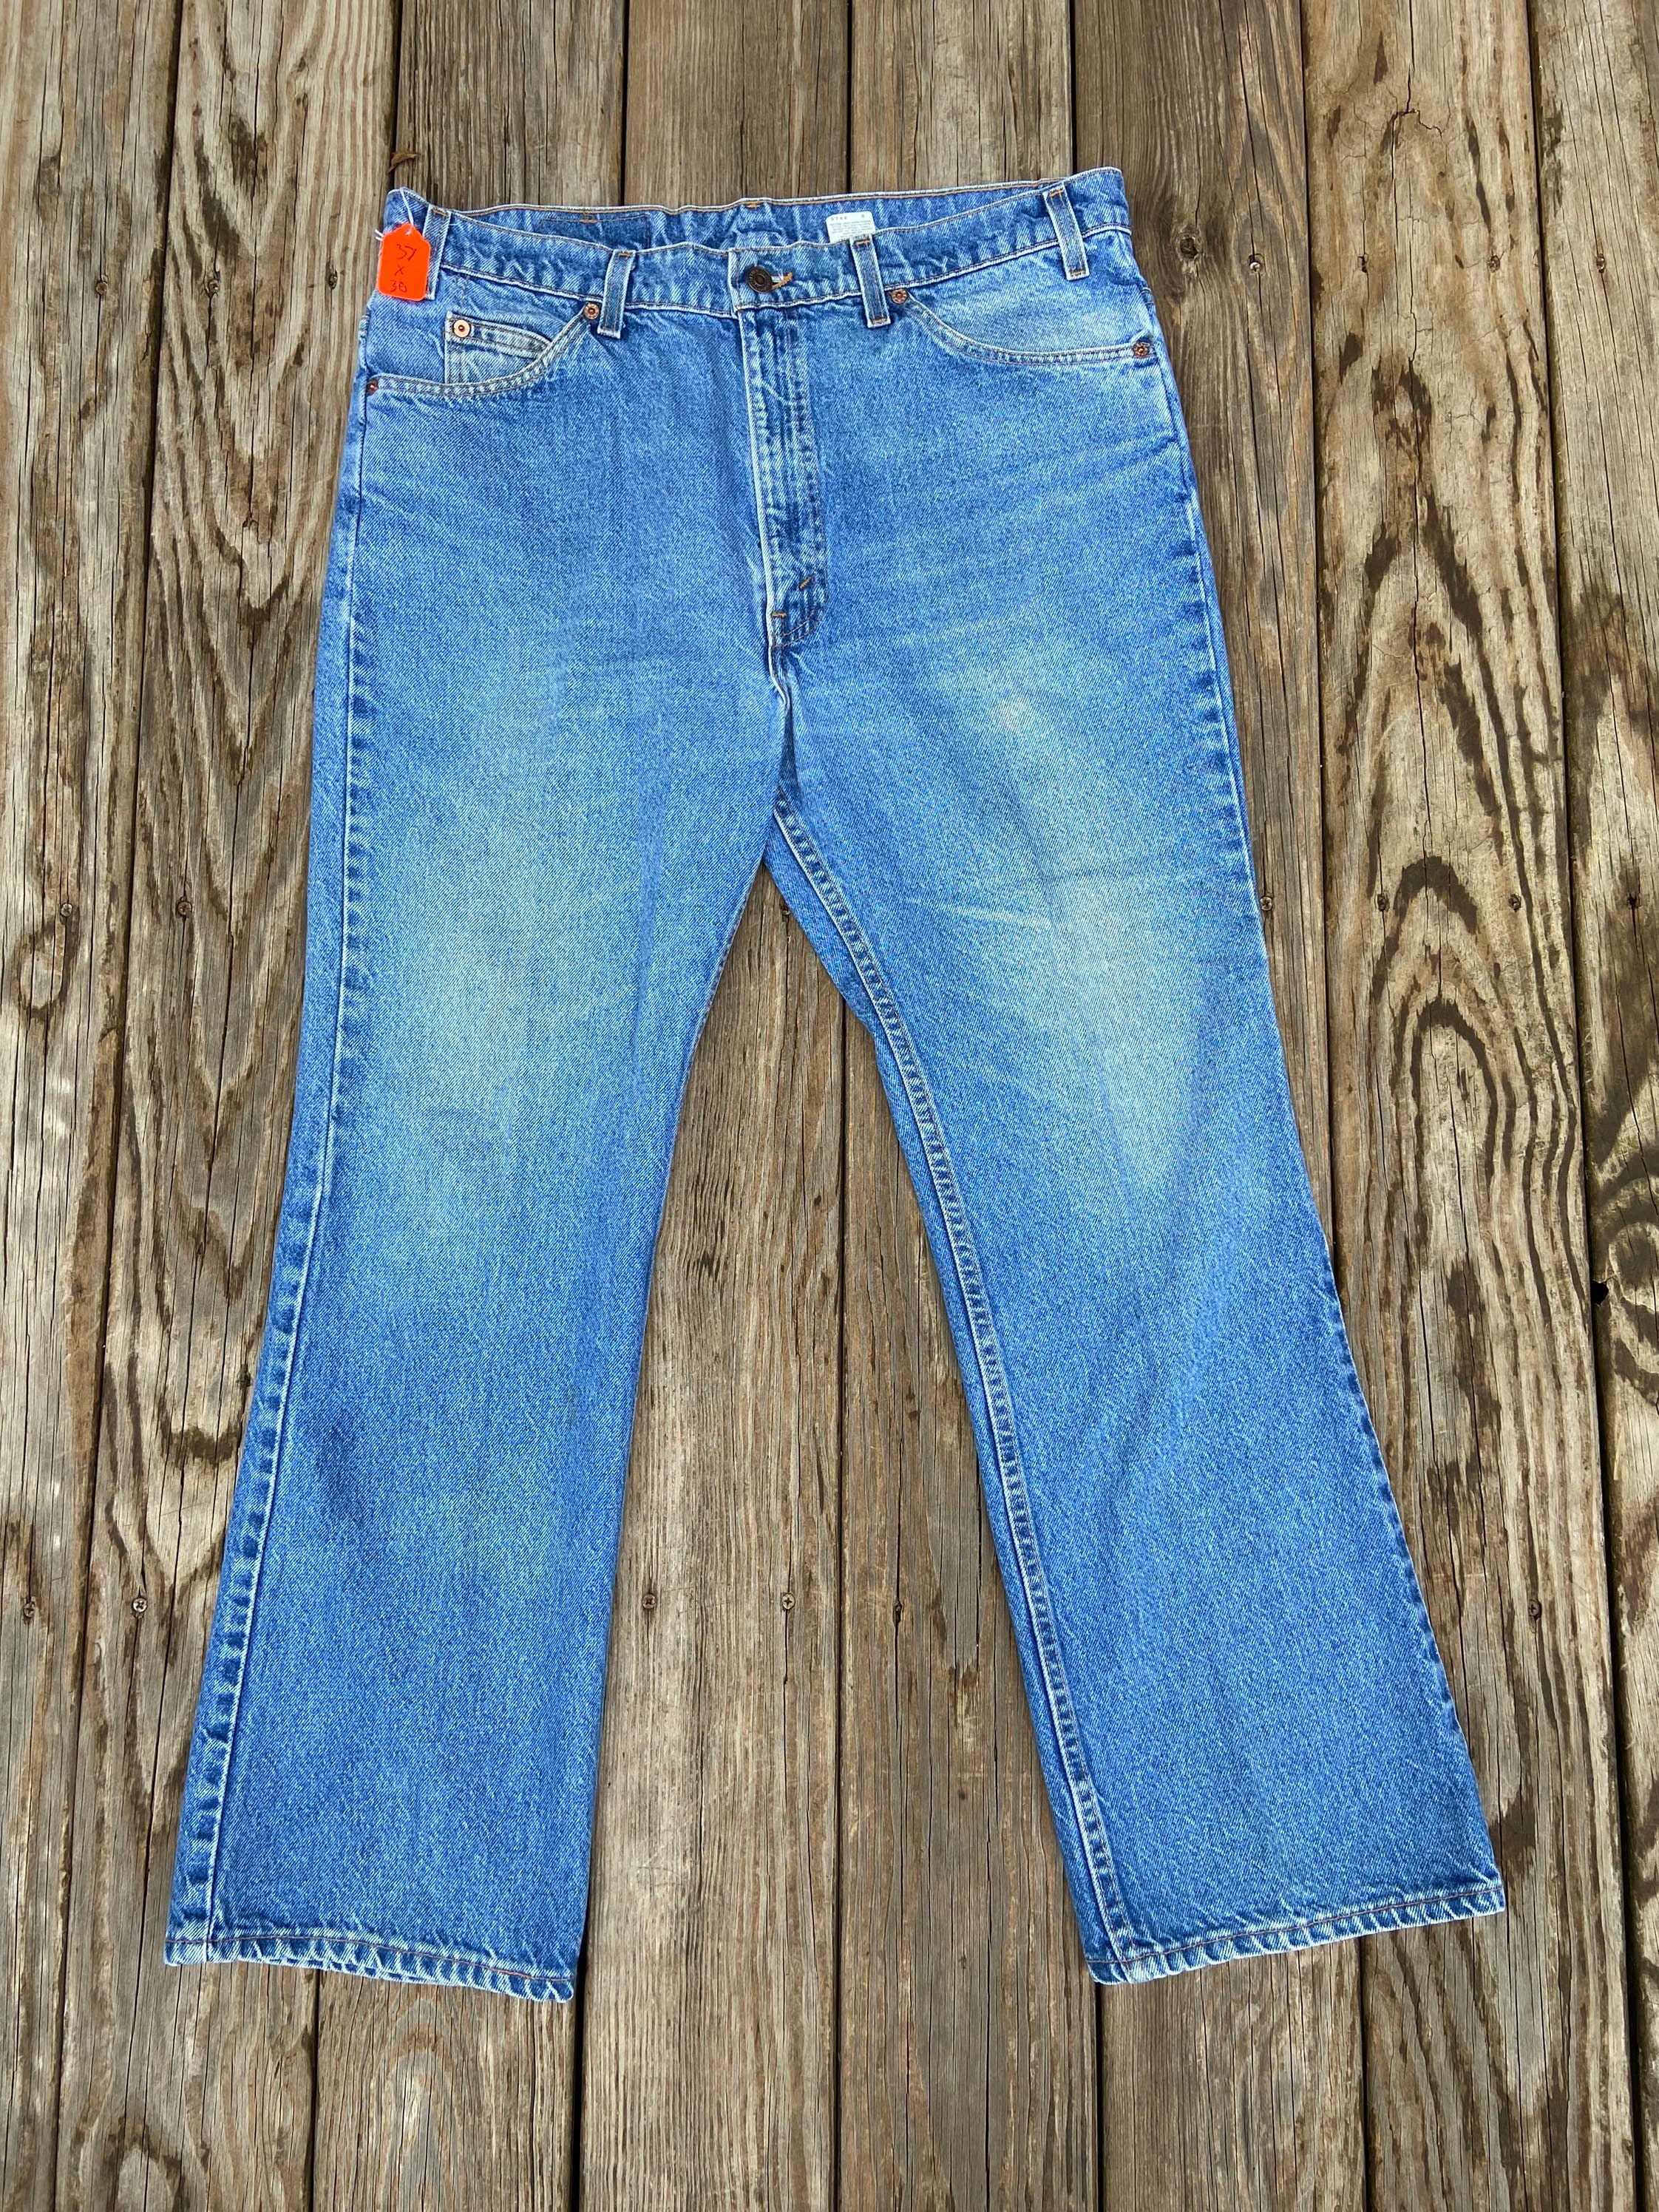 Vintage 517 Orange Tab 37x30 Levis Denim Jeans. Made in the - Etsy Denmark